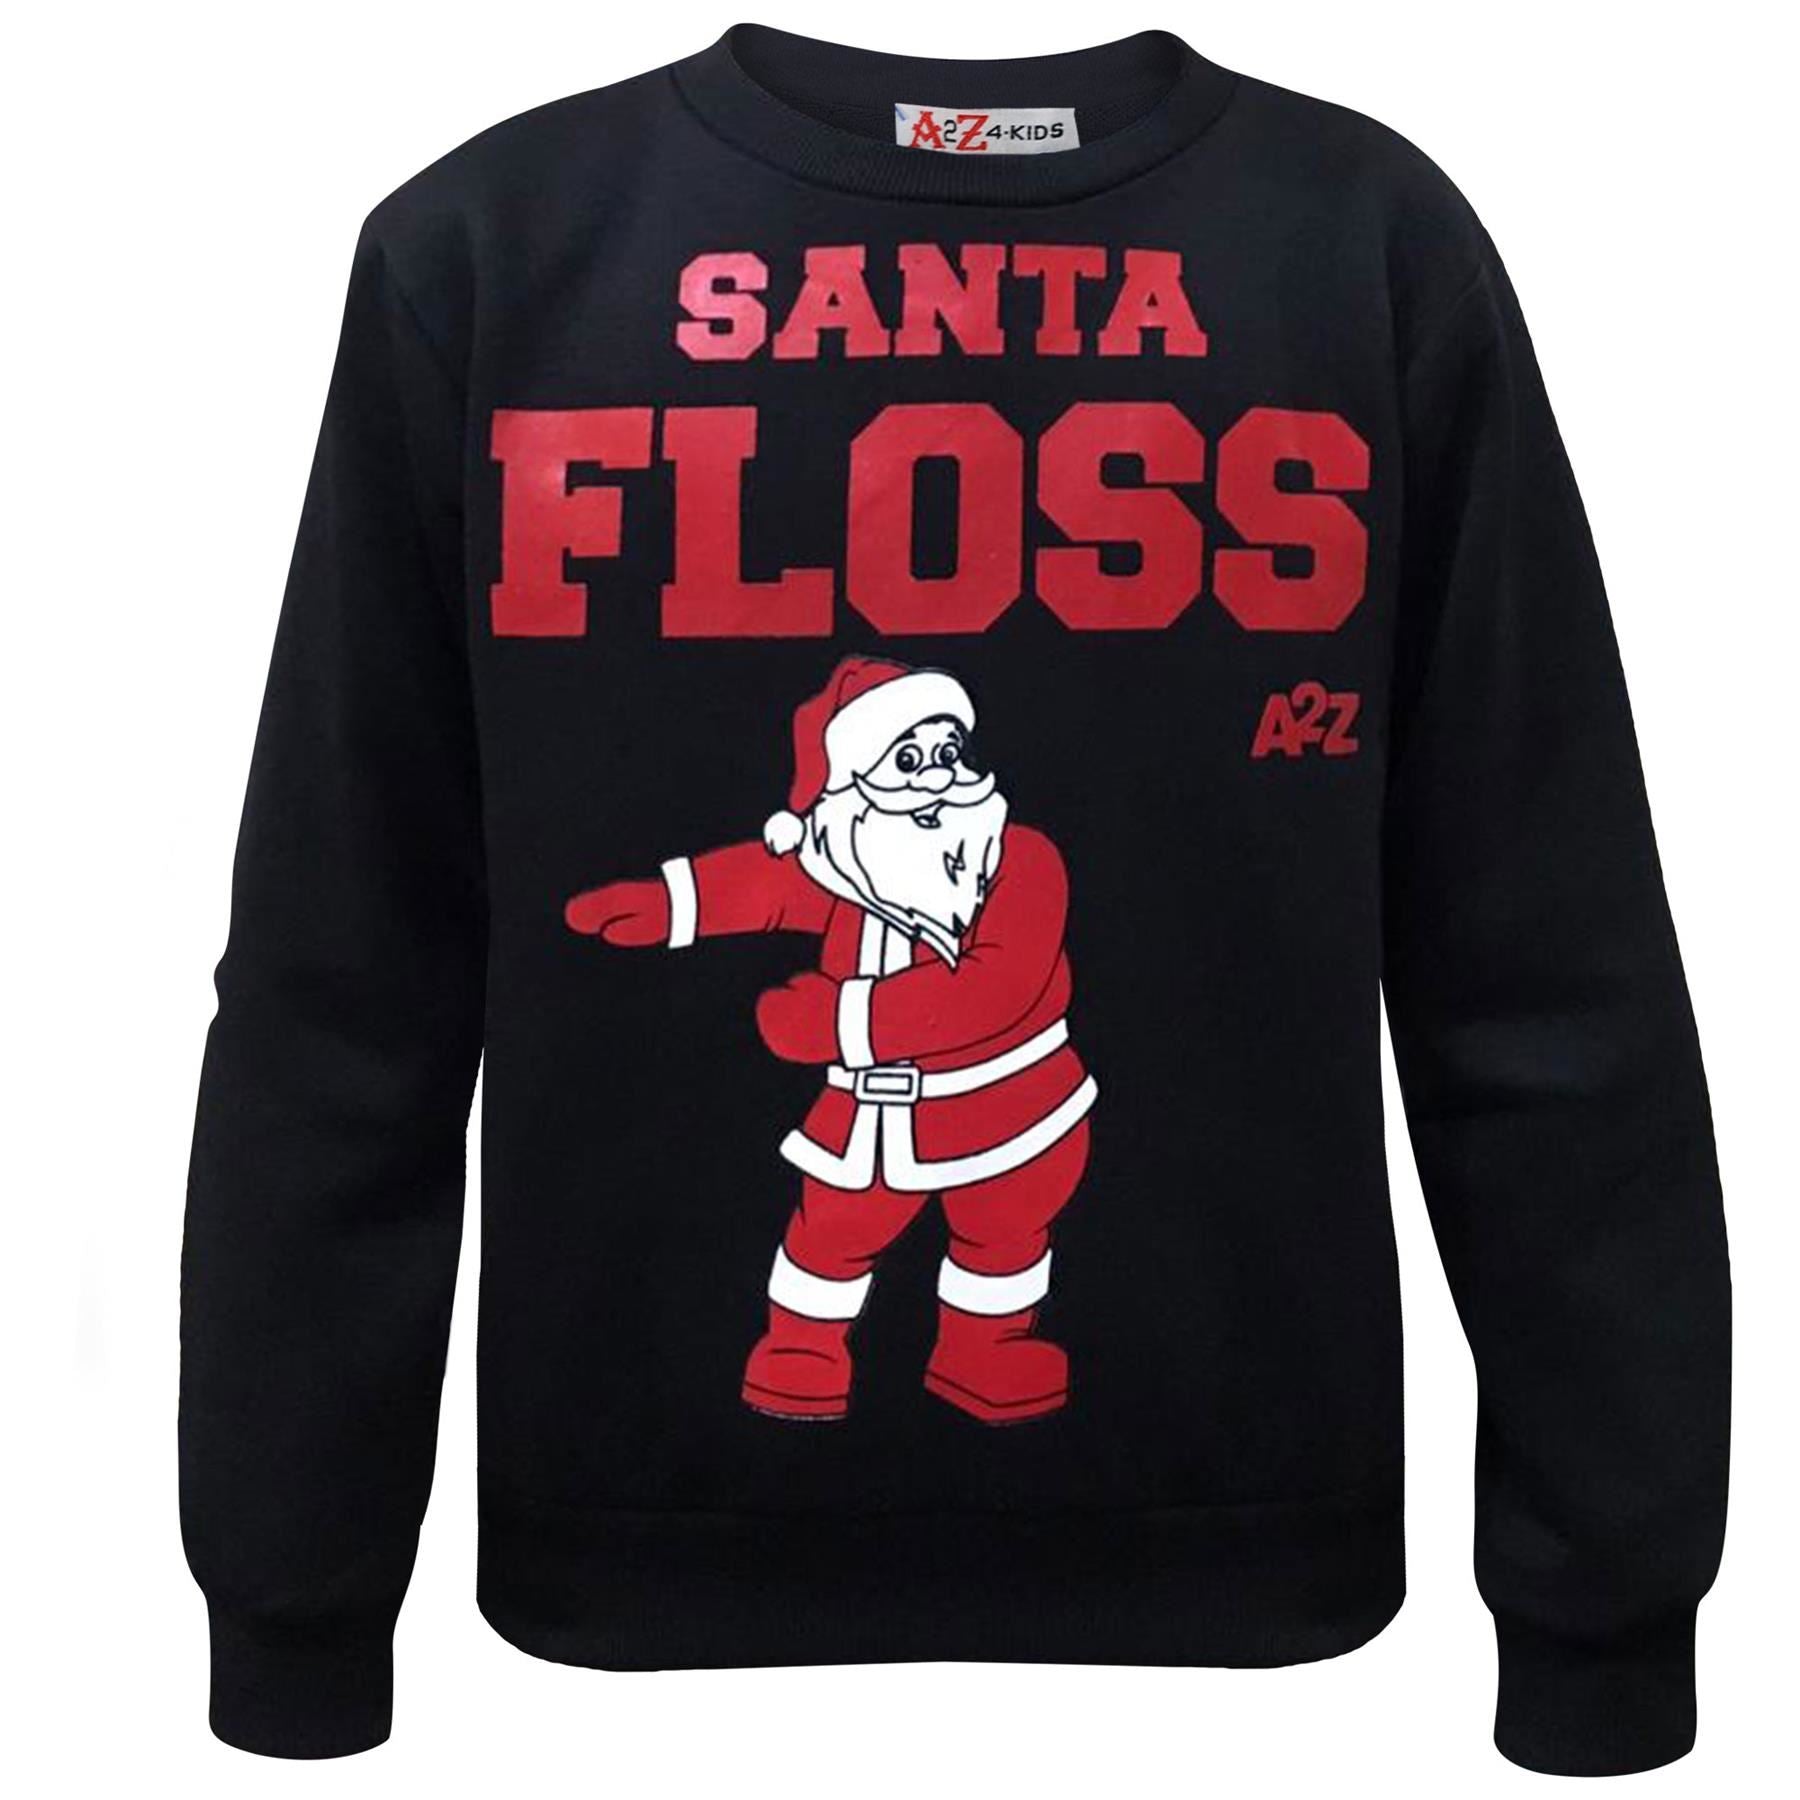 Kids Girls Boys Black Christmas Jumper Pullover Sweatshirt Santa Floss Print